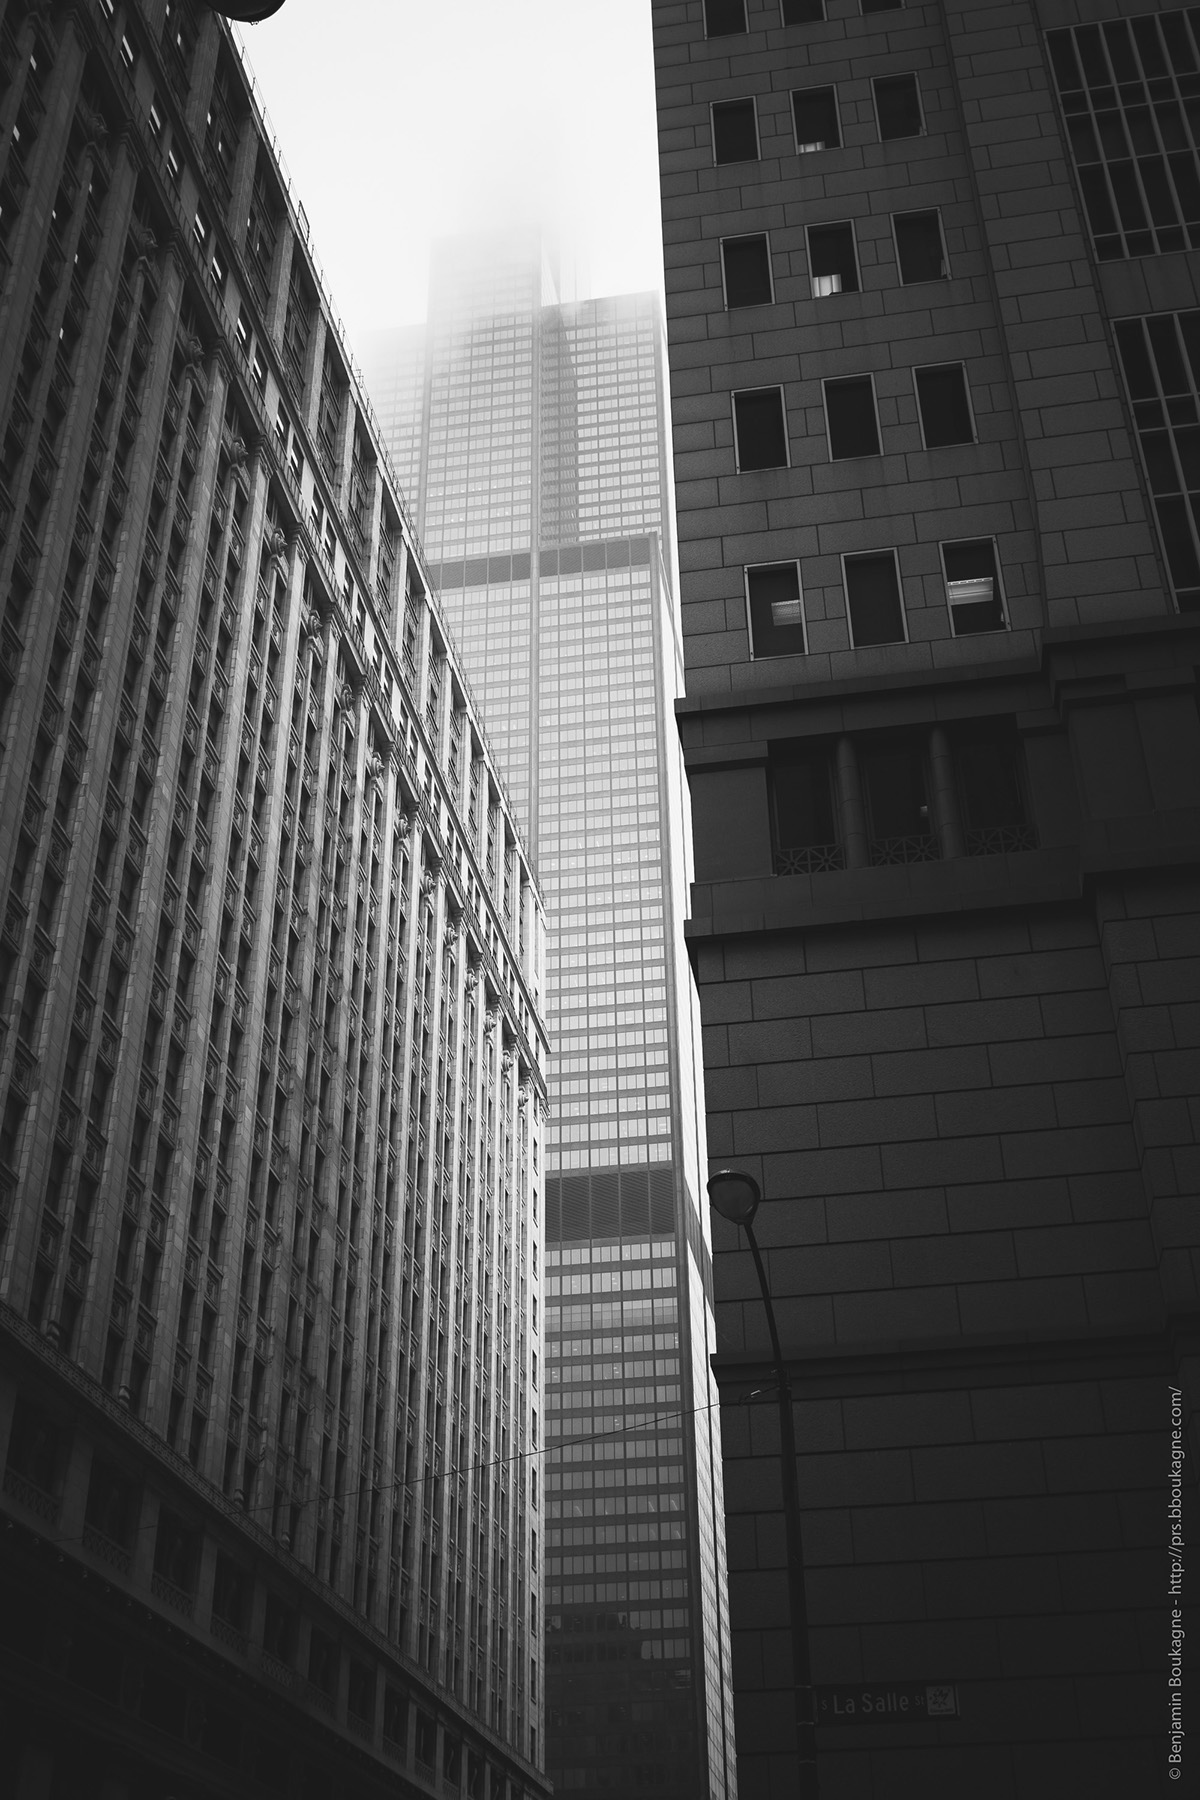 chicago fog brouillard brume mist rue Street Boukagne noir et blanc black and white america Bird's eye view building cityscape Elevated View